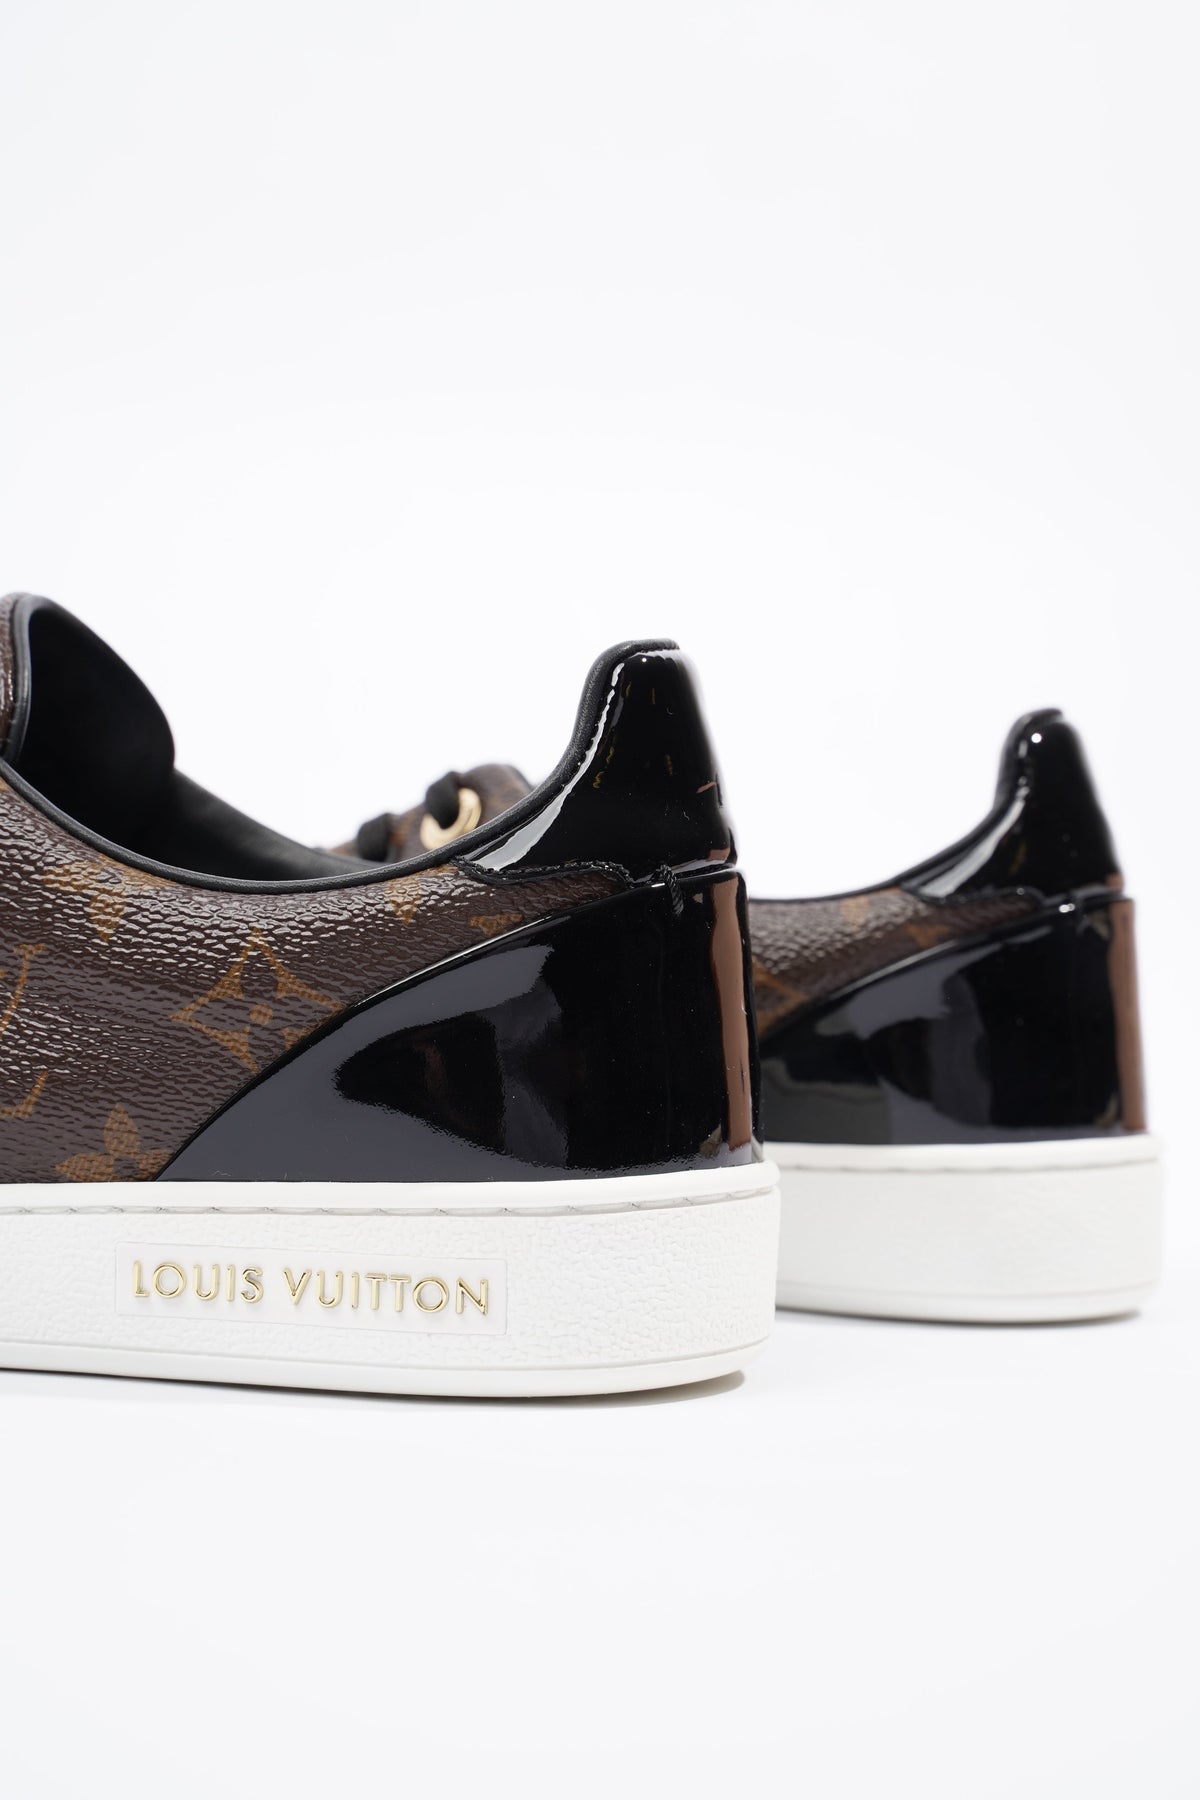 Louis Vuitton Wmns Frontrow 'Monogram